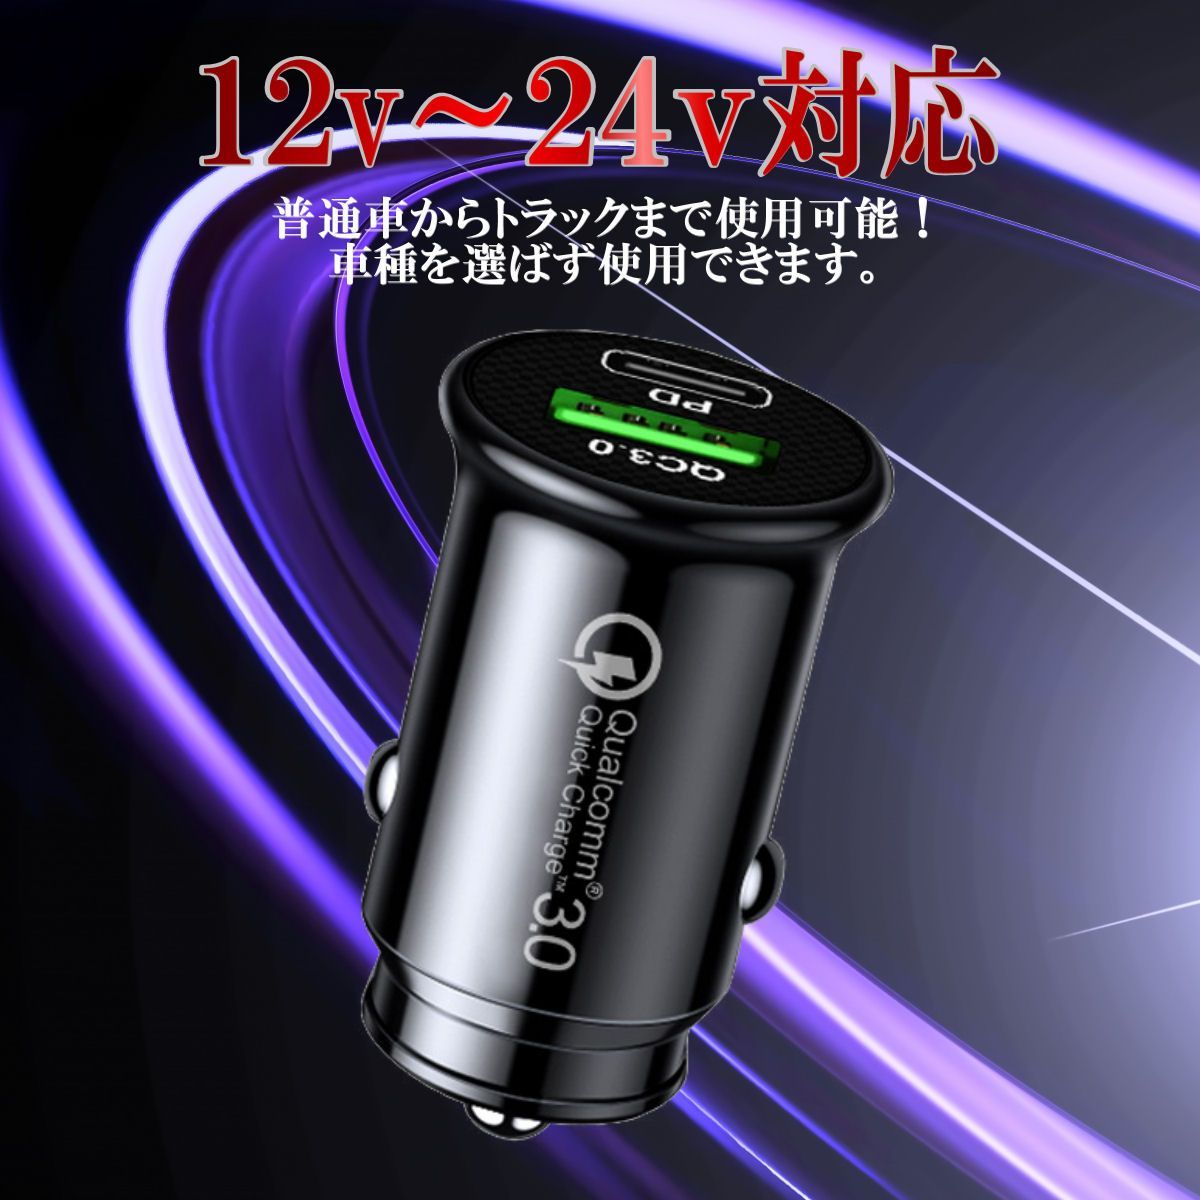 Quick Charge 3.0対応カーチャージャー iPhone・スマートフォン・タブレット充電 USB2ポート 急速充電 シガーソケット 5V 3A 最大出力36W 12V 24V対応 ブラック